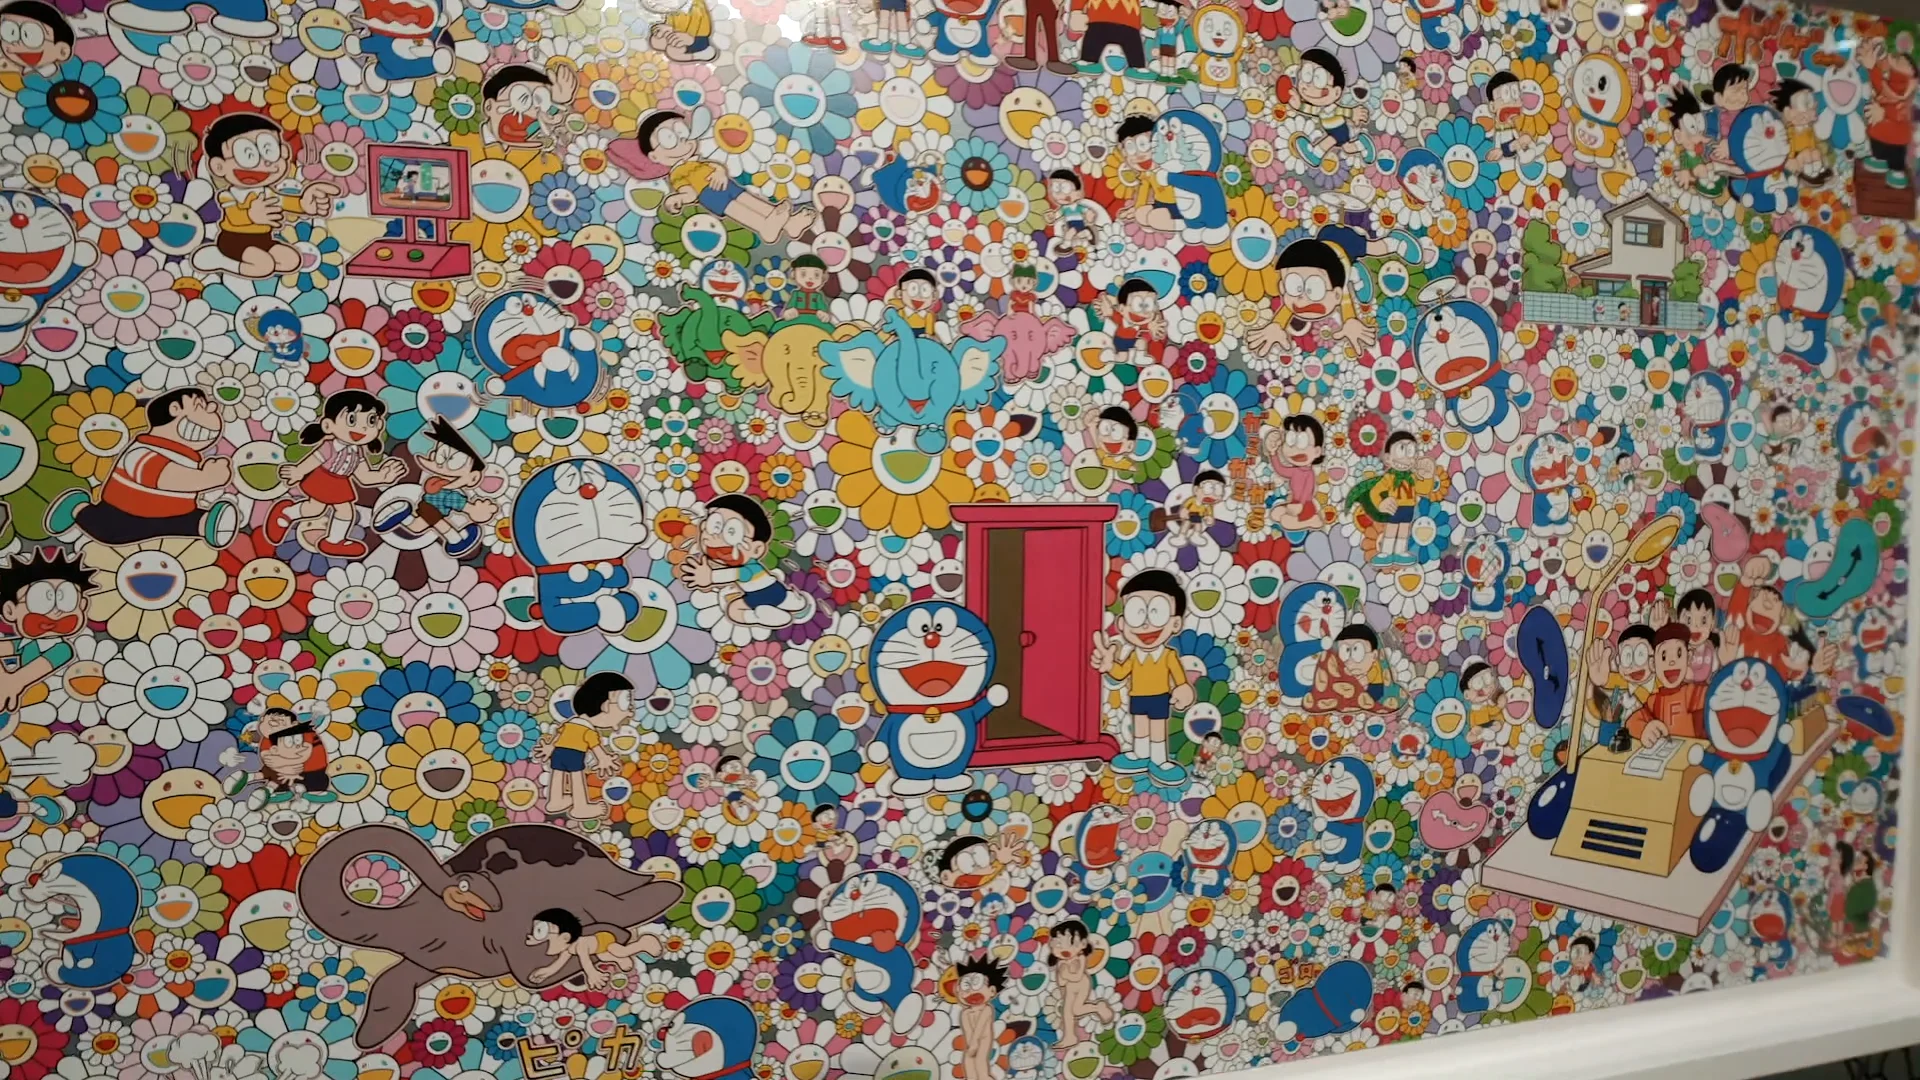 Takashi Murakami, 'From Superflat to Bubblewrap' at STPI